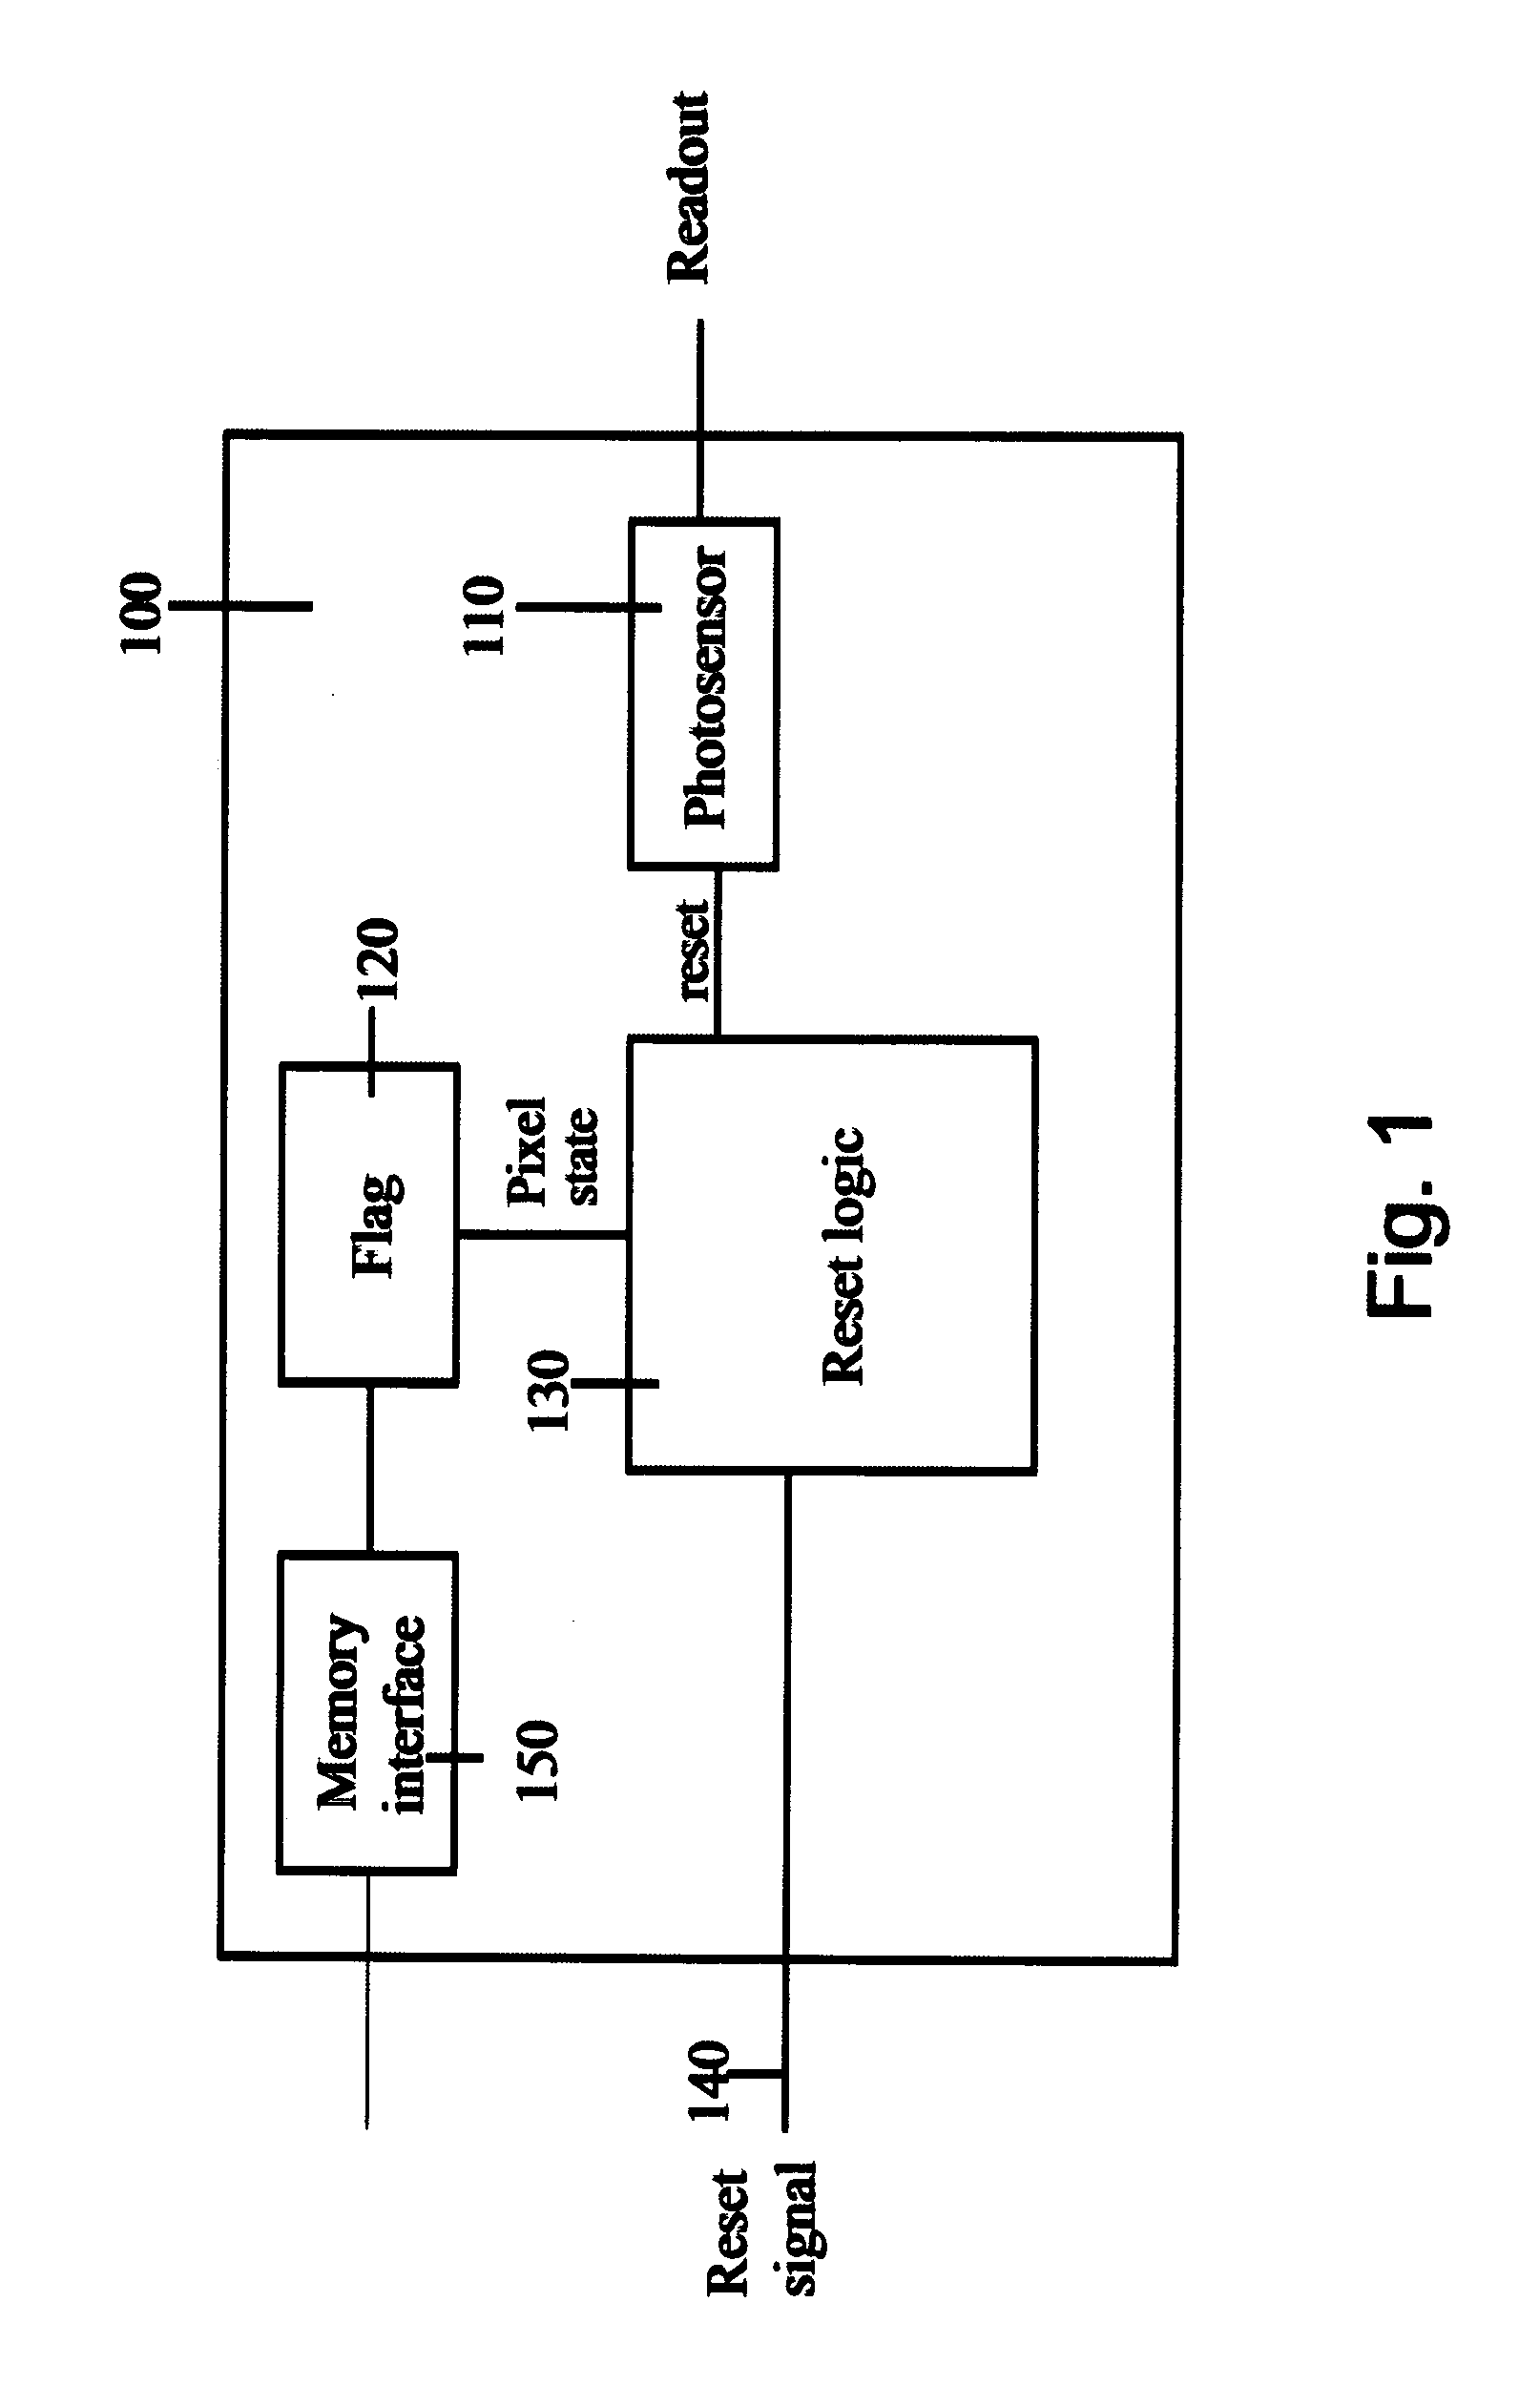 Optical pixel and image sensor